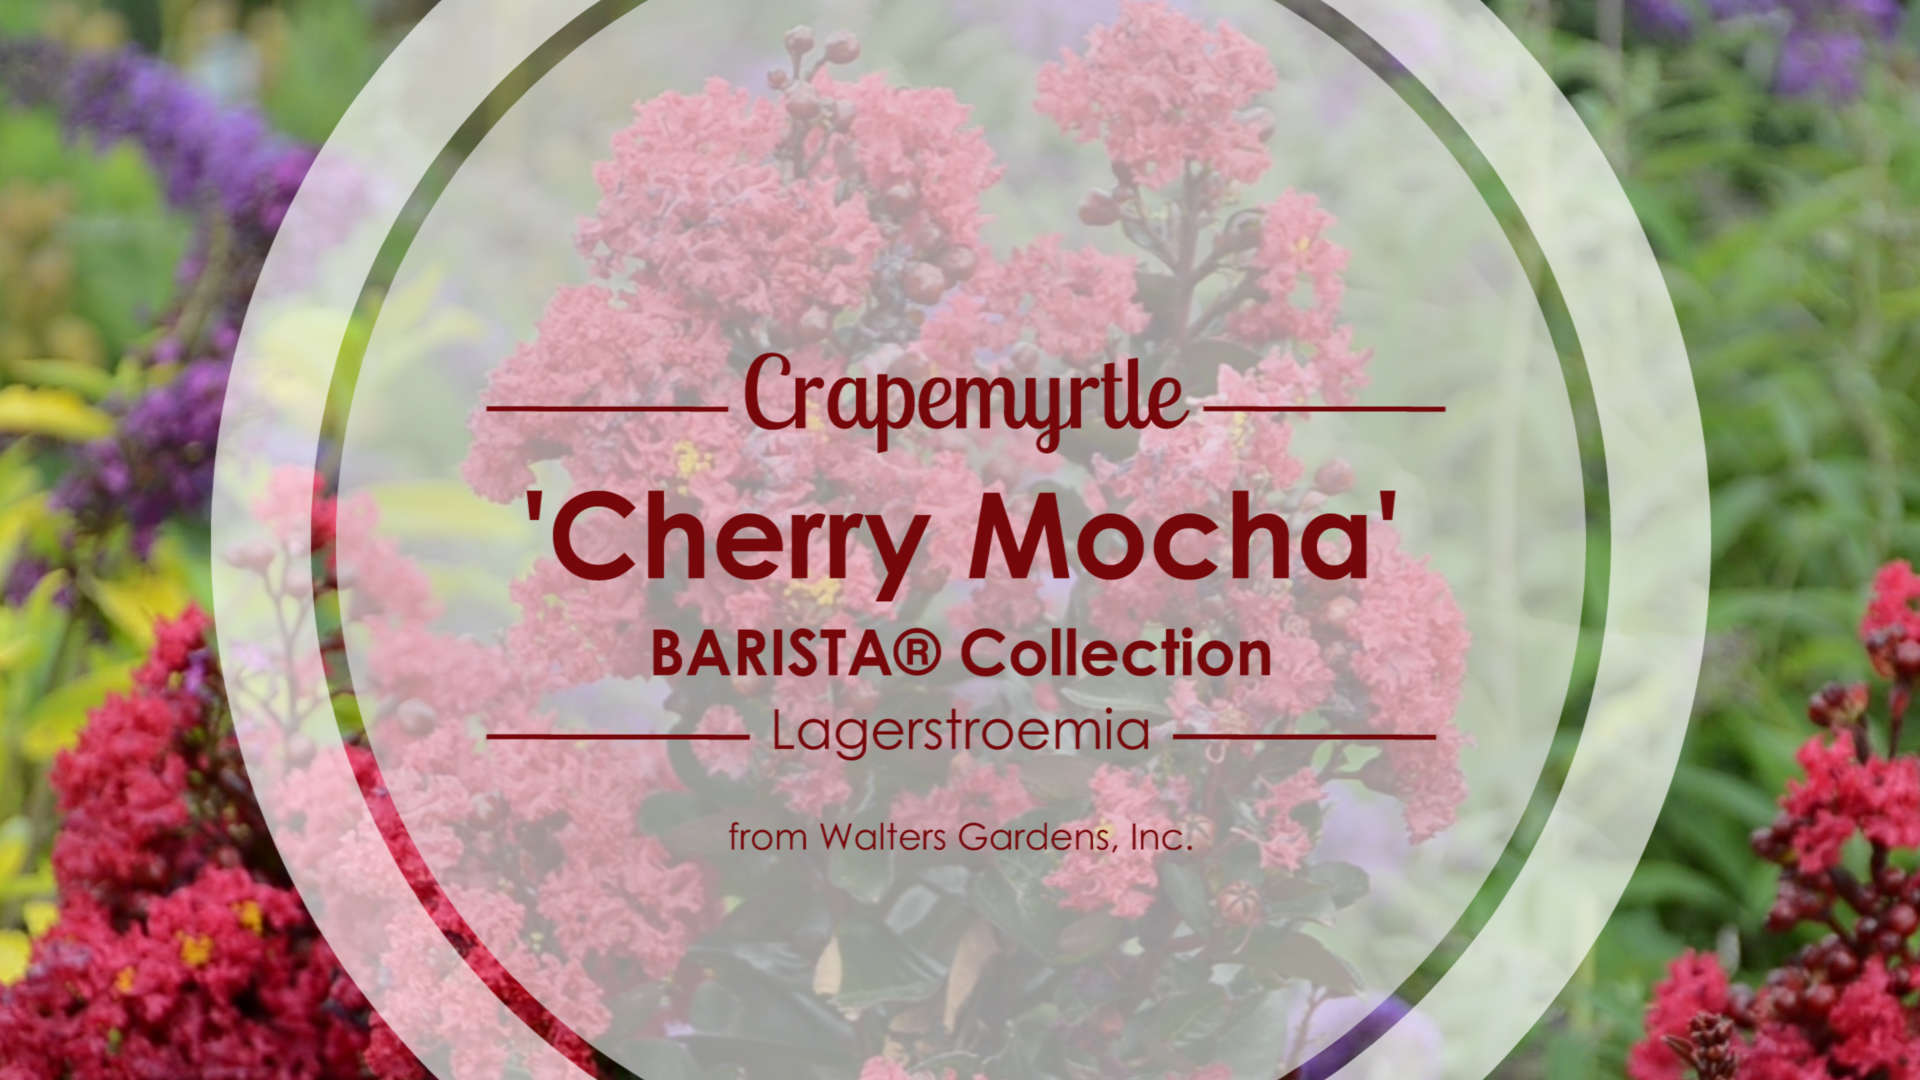 Lagerstroemia 'Cherry Mocha' Crapemyrtle